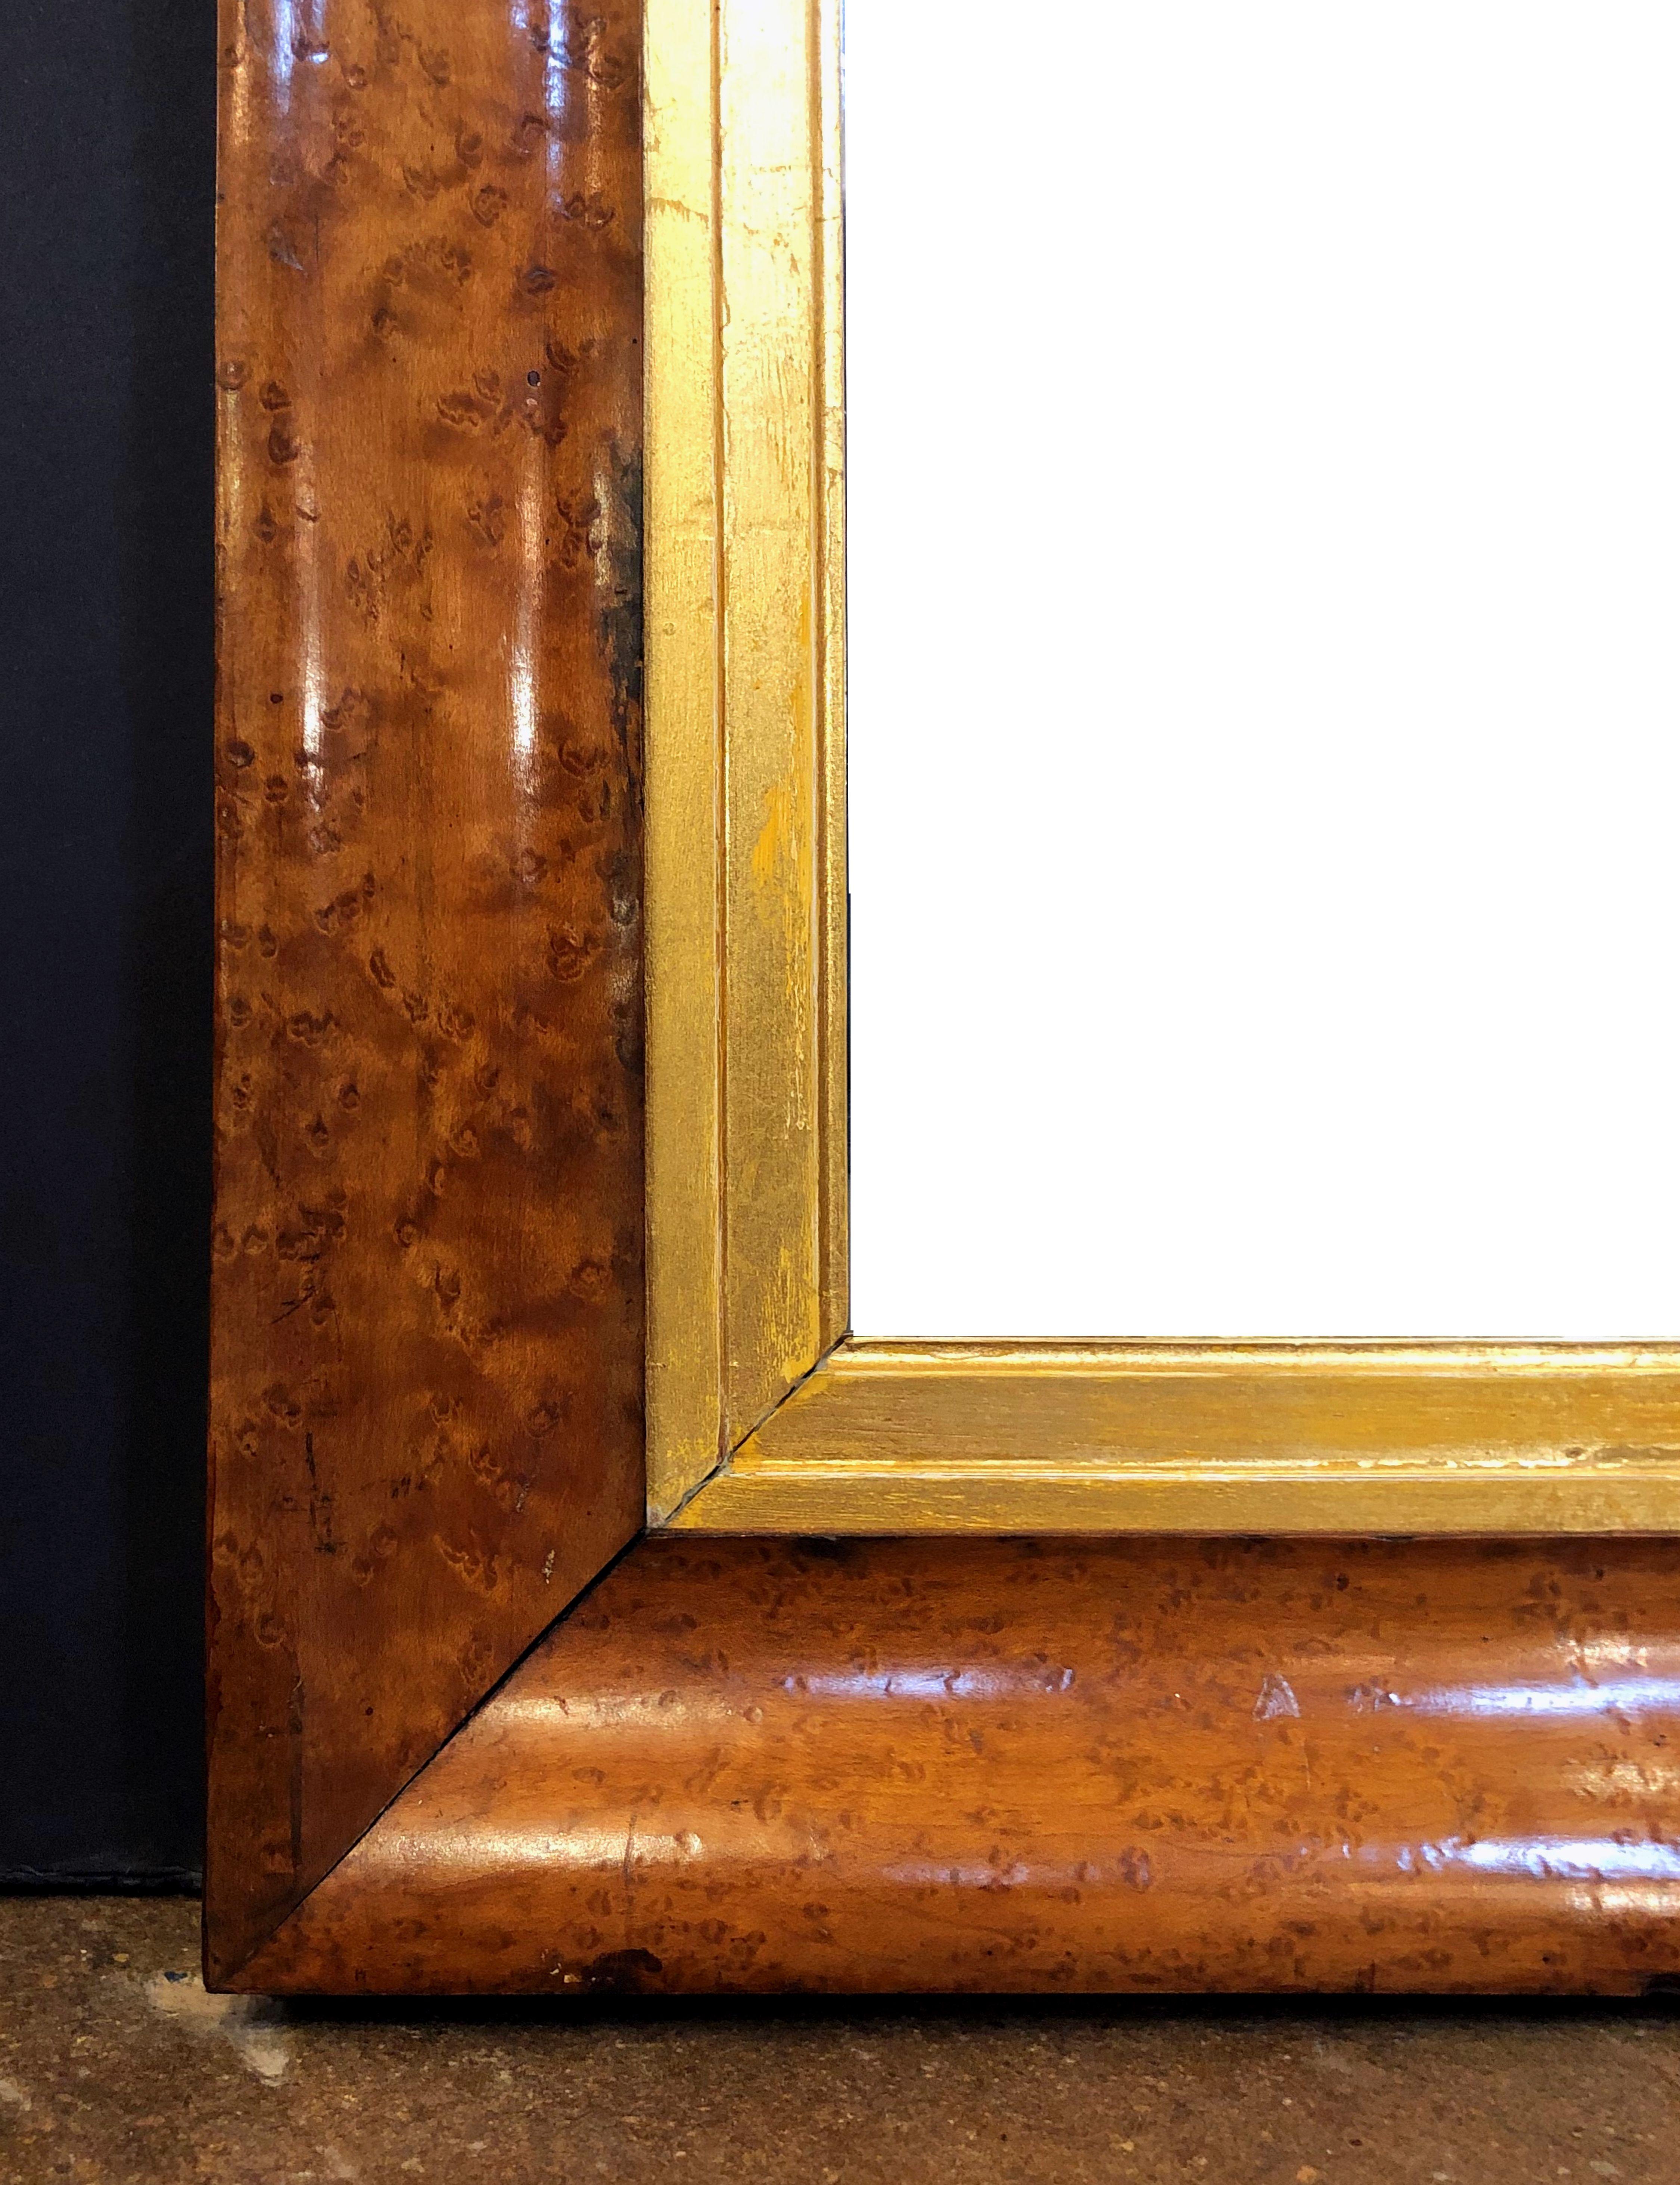 19th Century English Rectangular Maple and Gilt-wood Framed Mirror (H 41 3/4 x W 31 7/8)